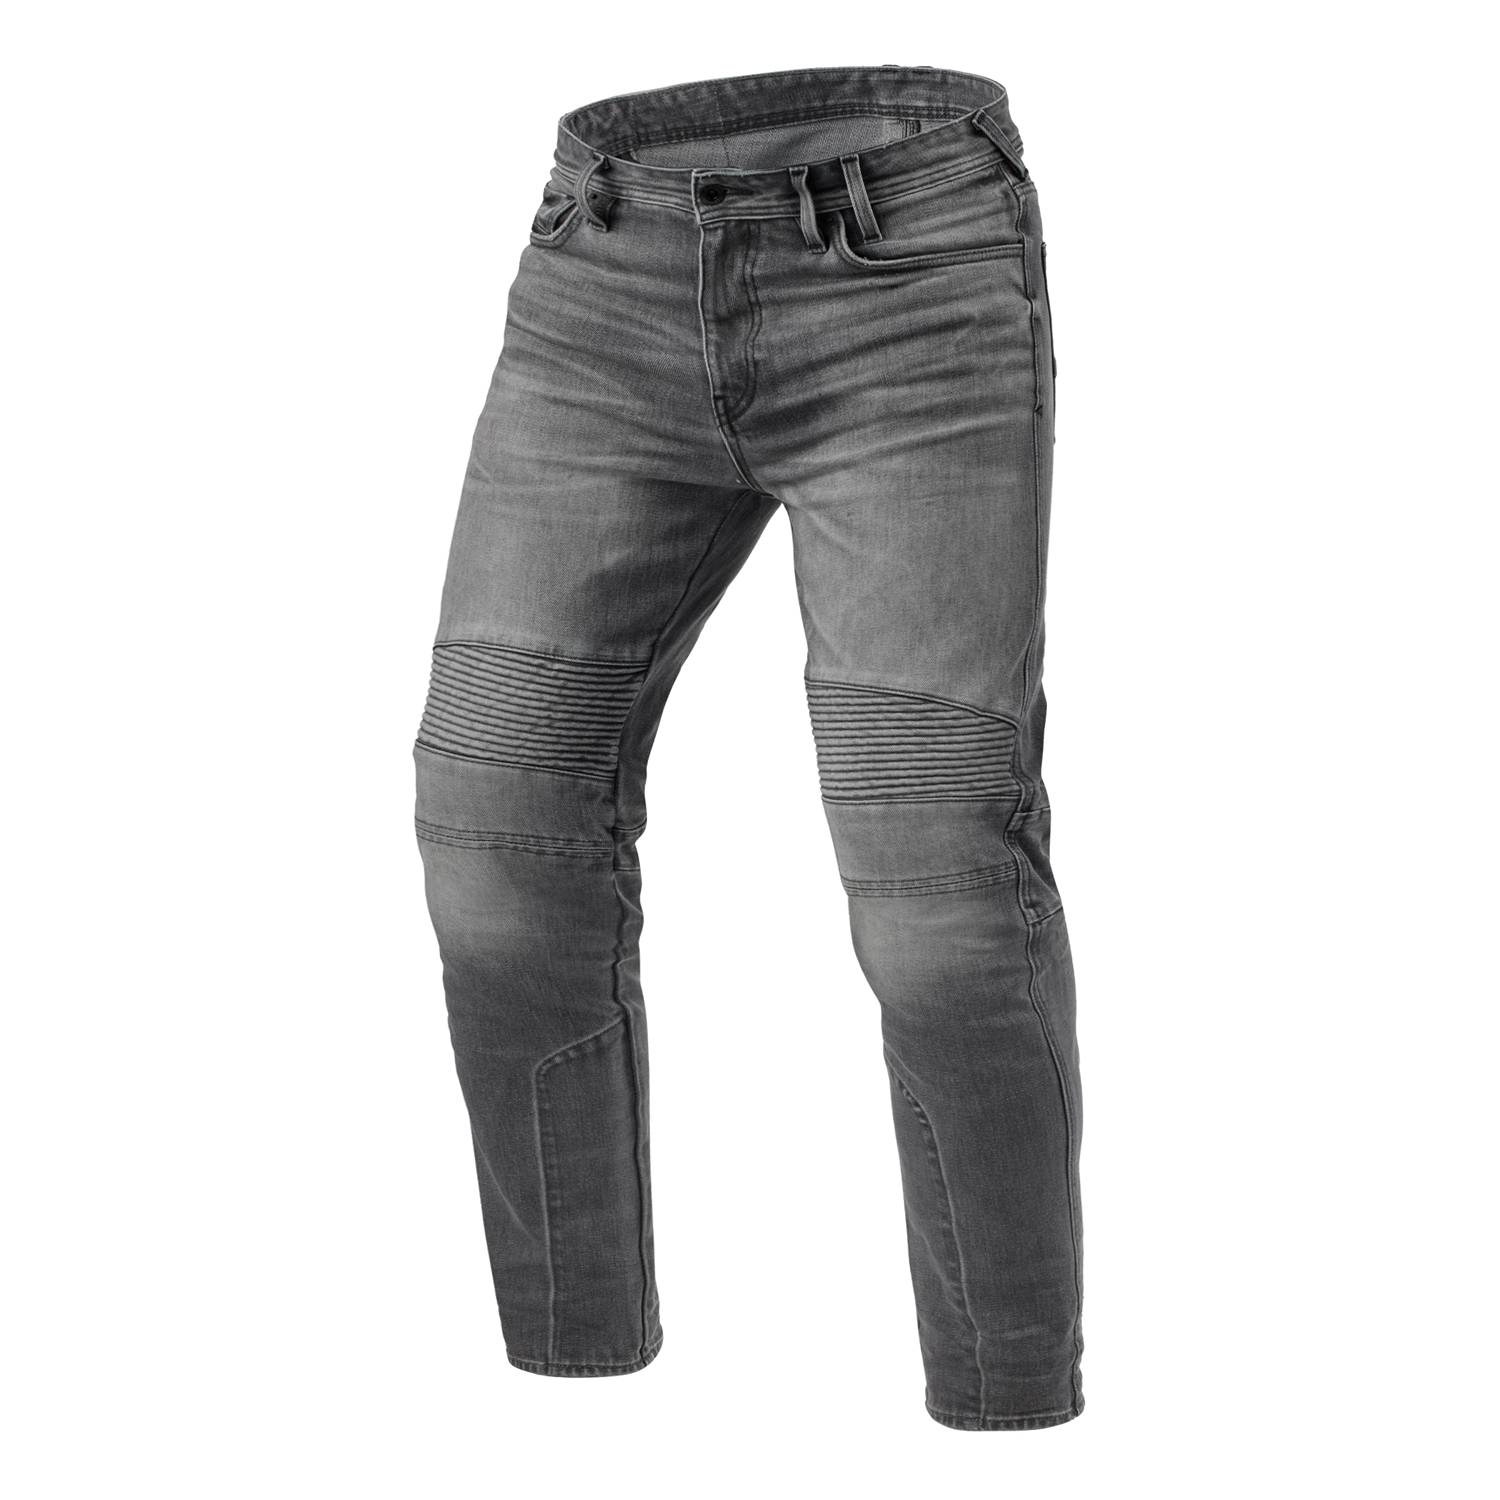 Image of REV'IT! Jeans Moto 2 TF Medium Grey Used L36 Motorcycle Jeans Größe L36/W31